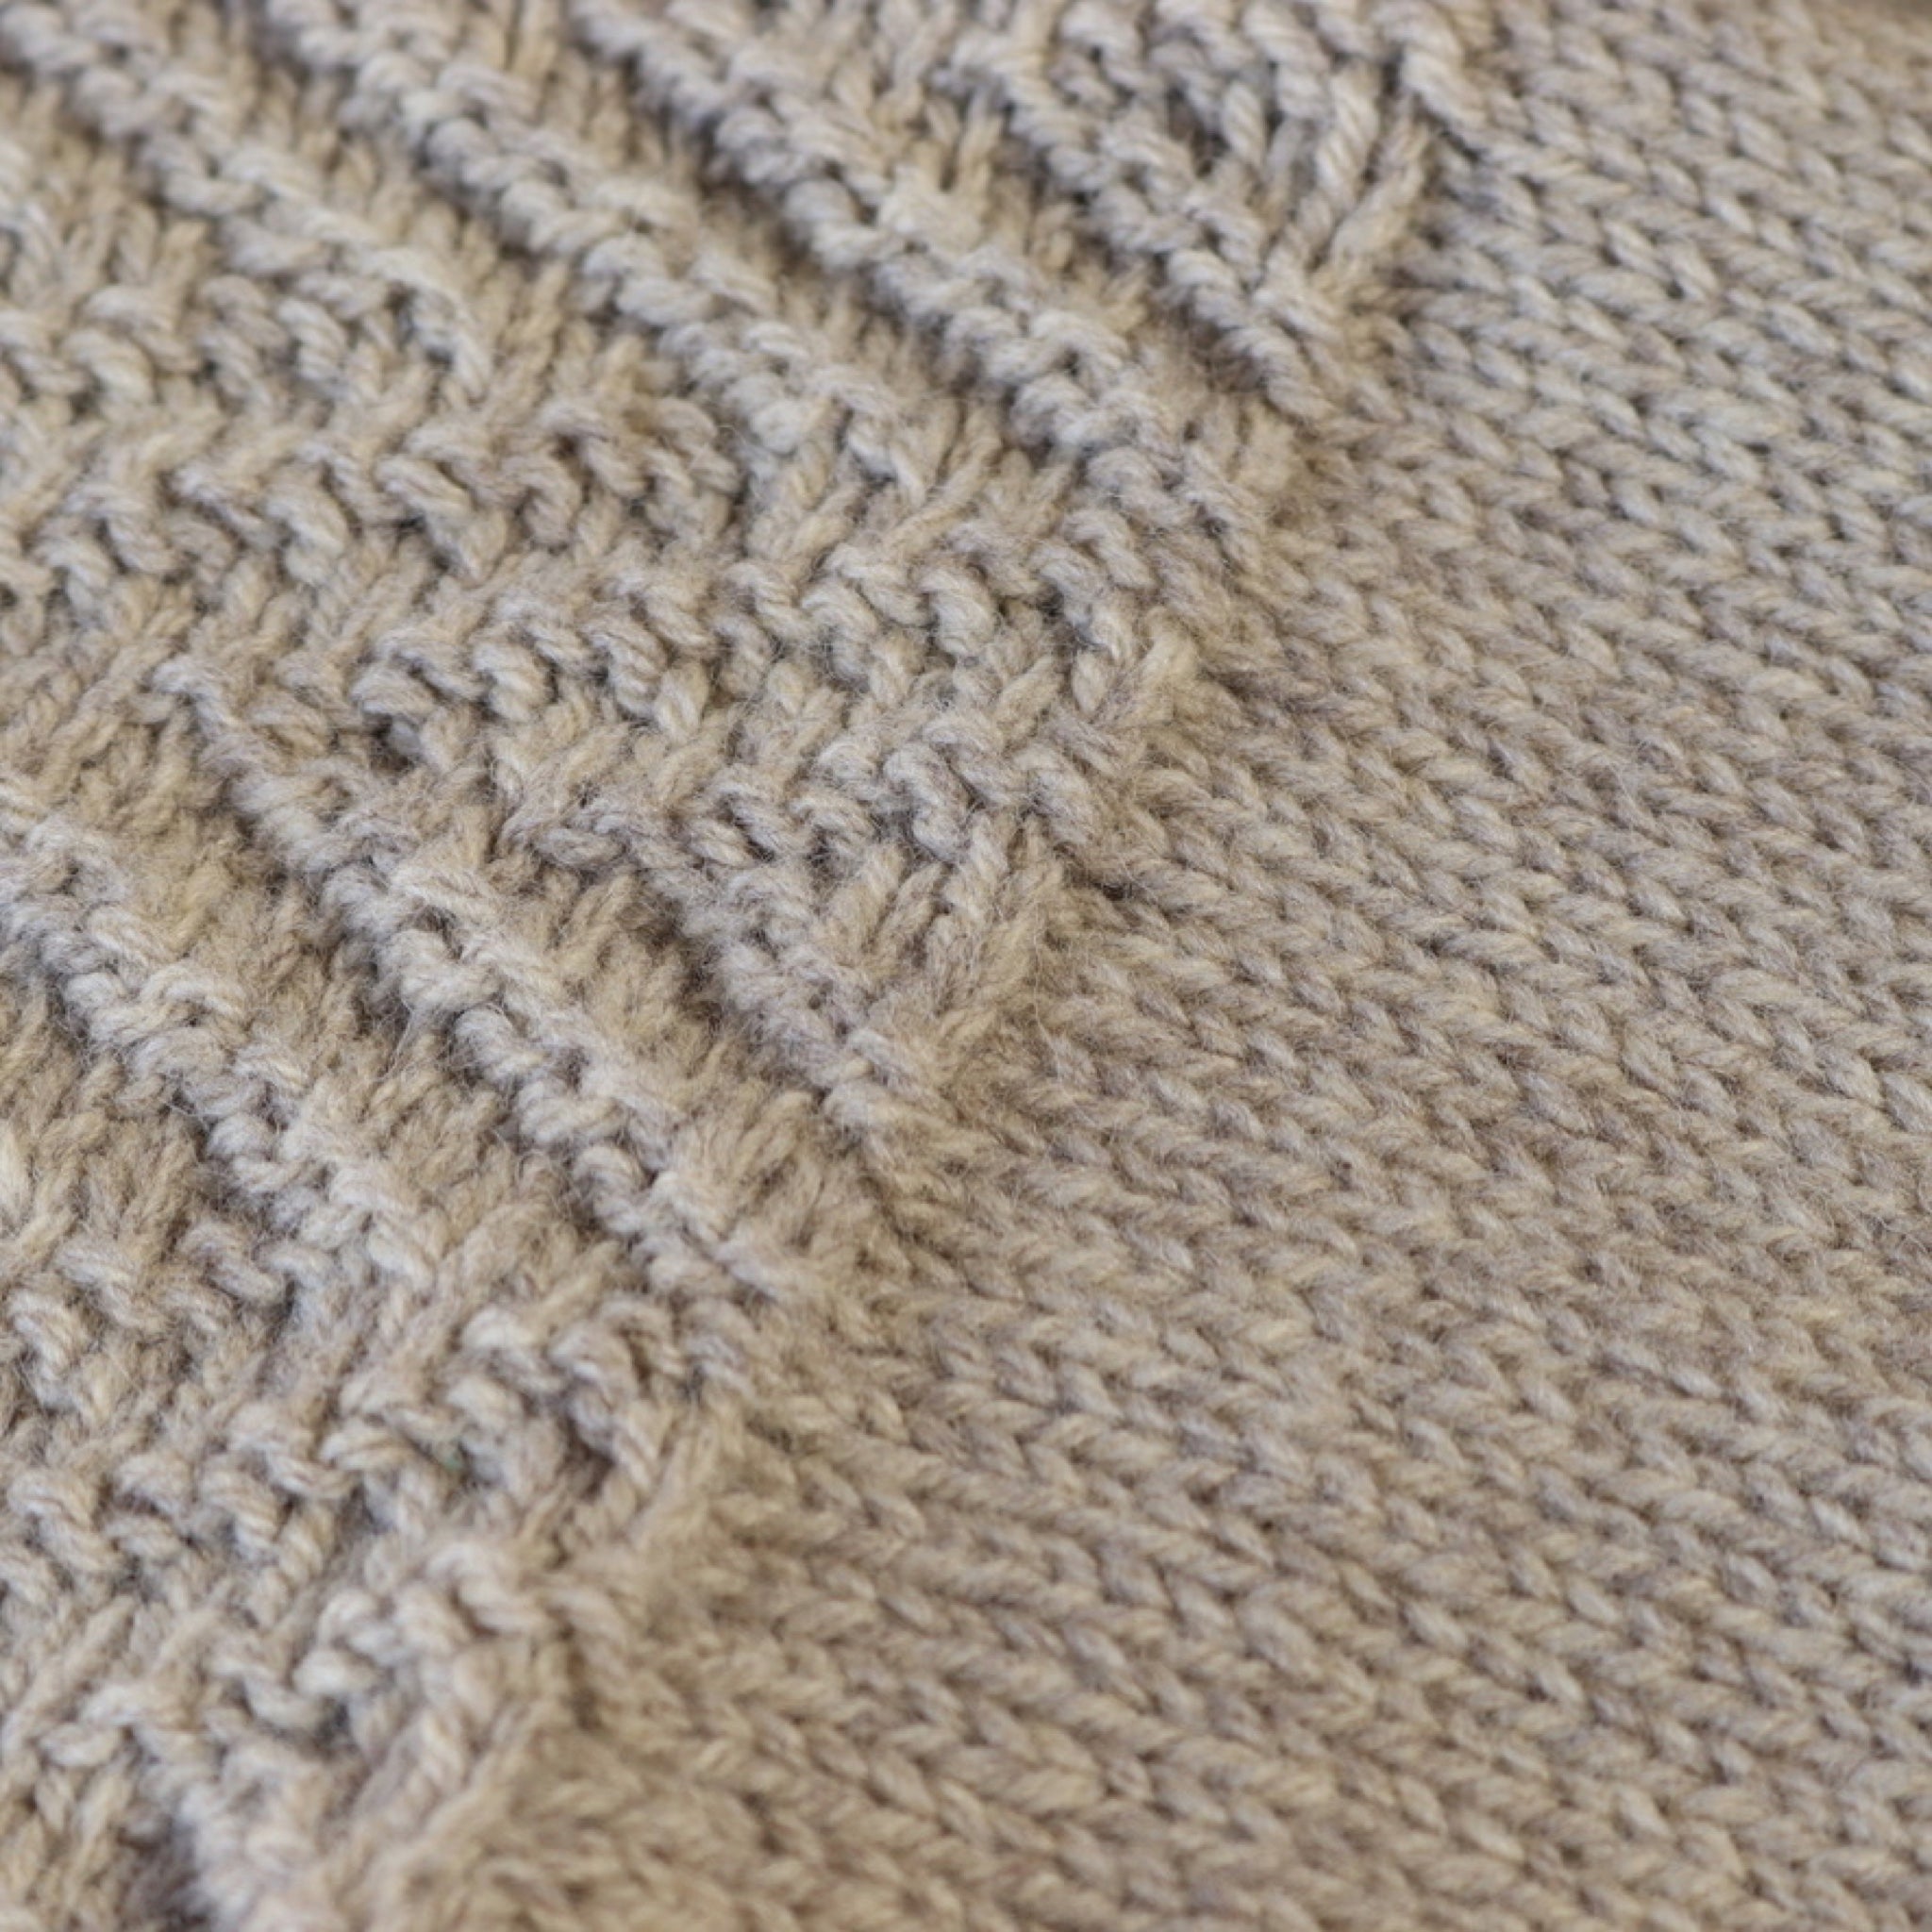 Kesennuma knitting etude - 11